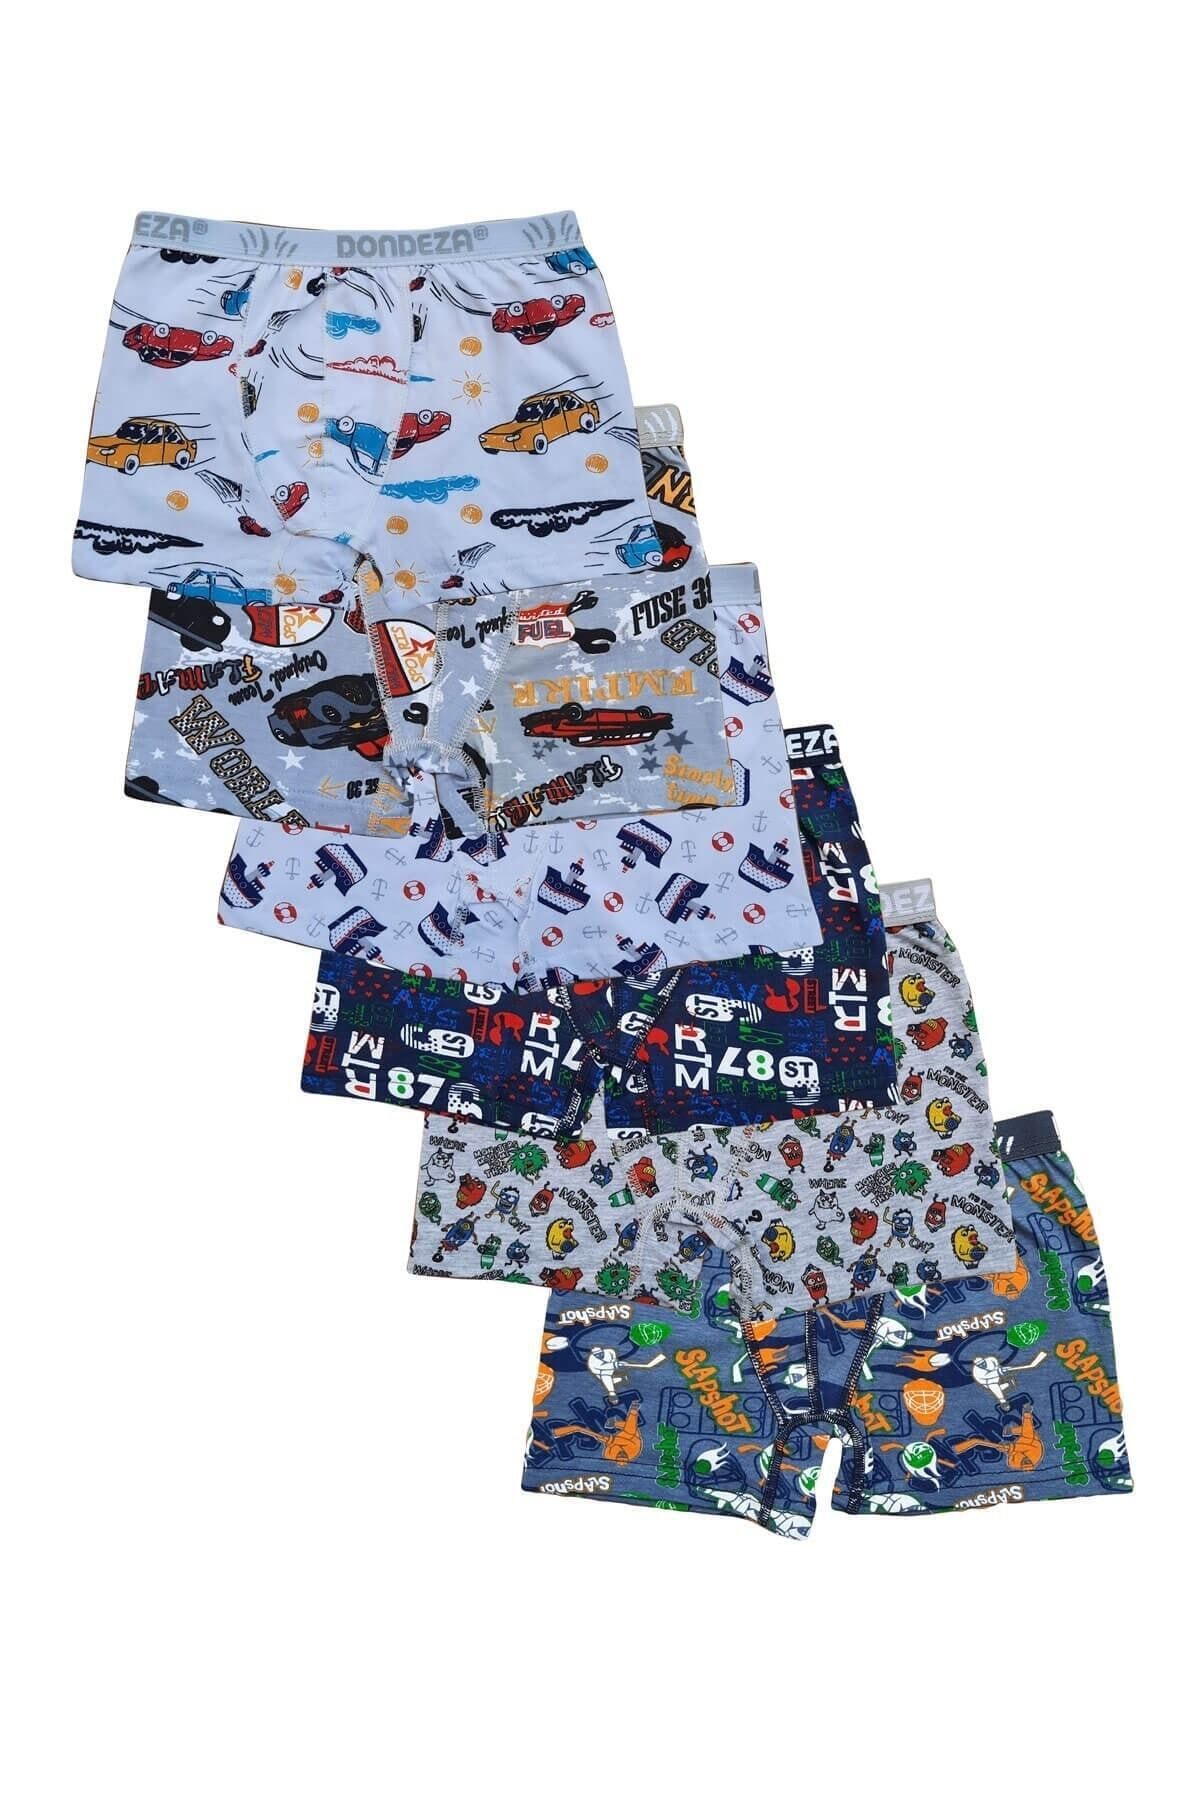 Cheap Dondeza 6-Piece Boys Colorful Patterned Boxer Underpants